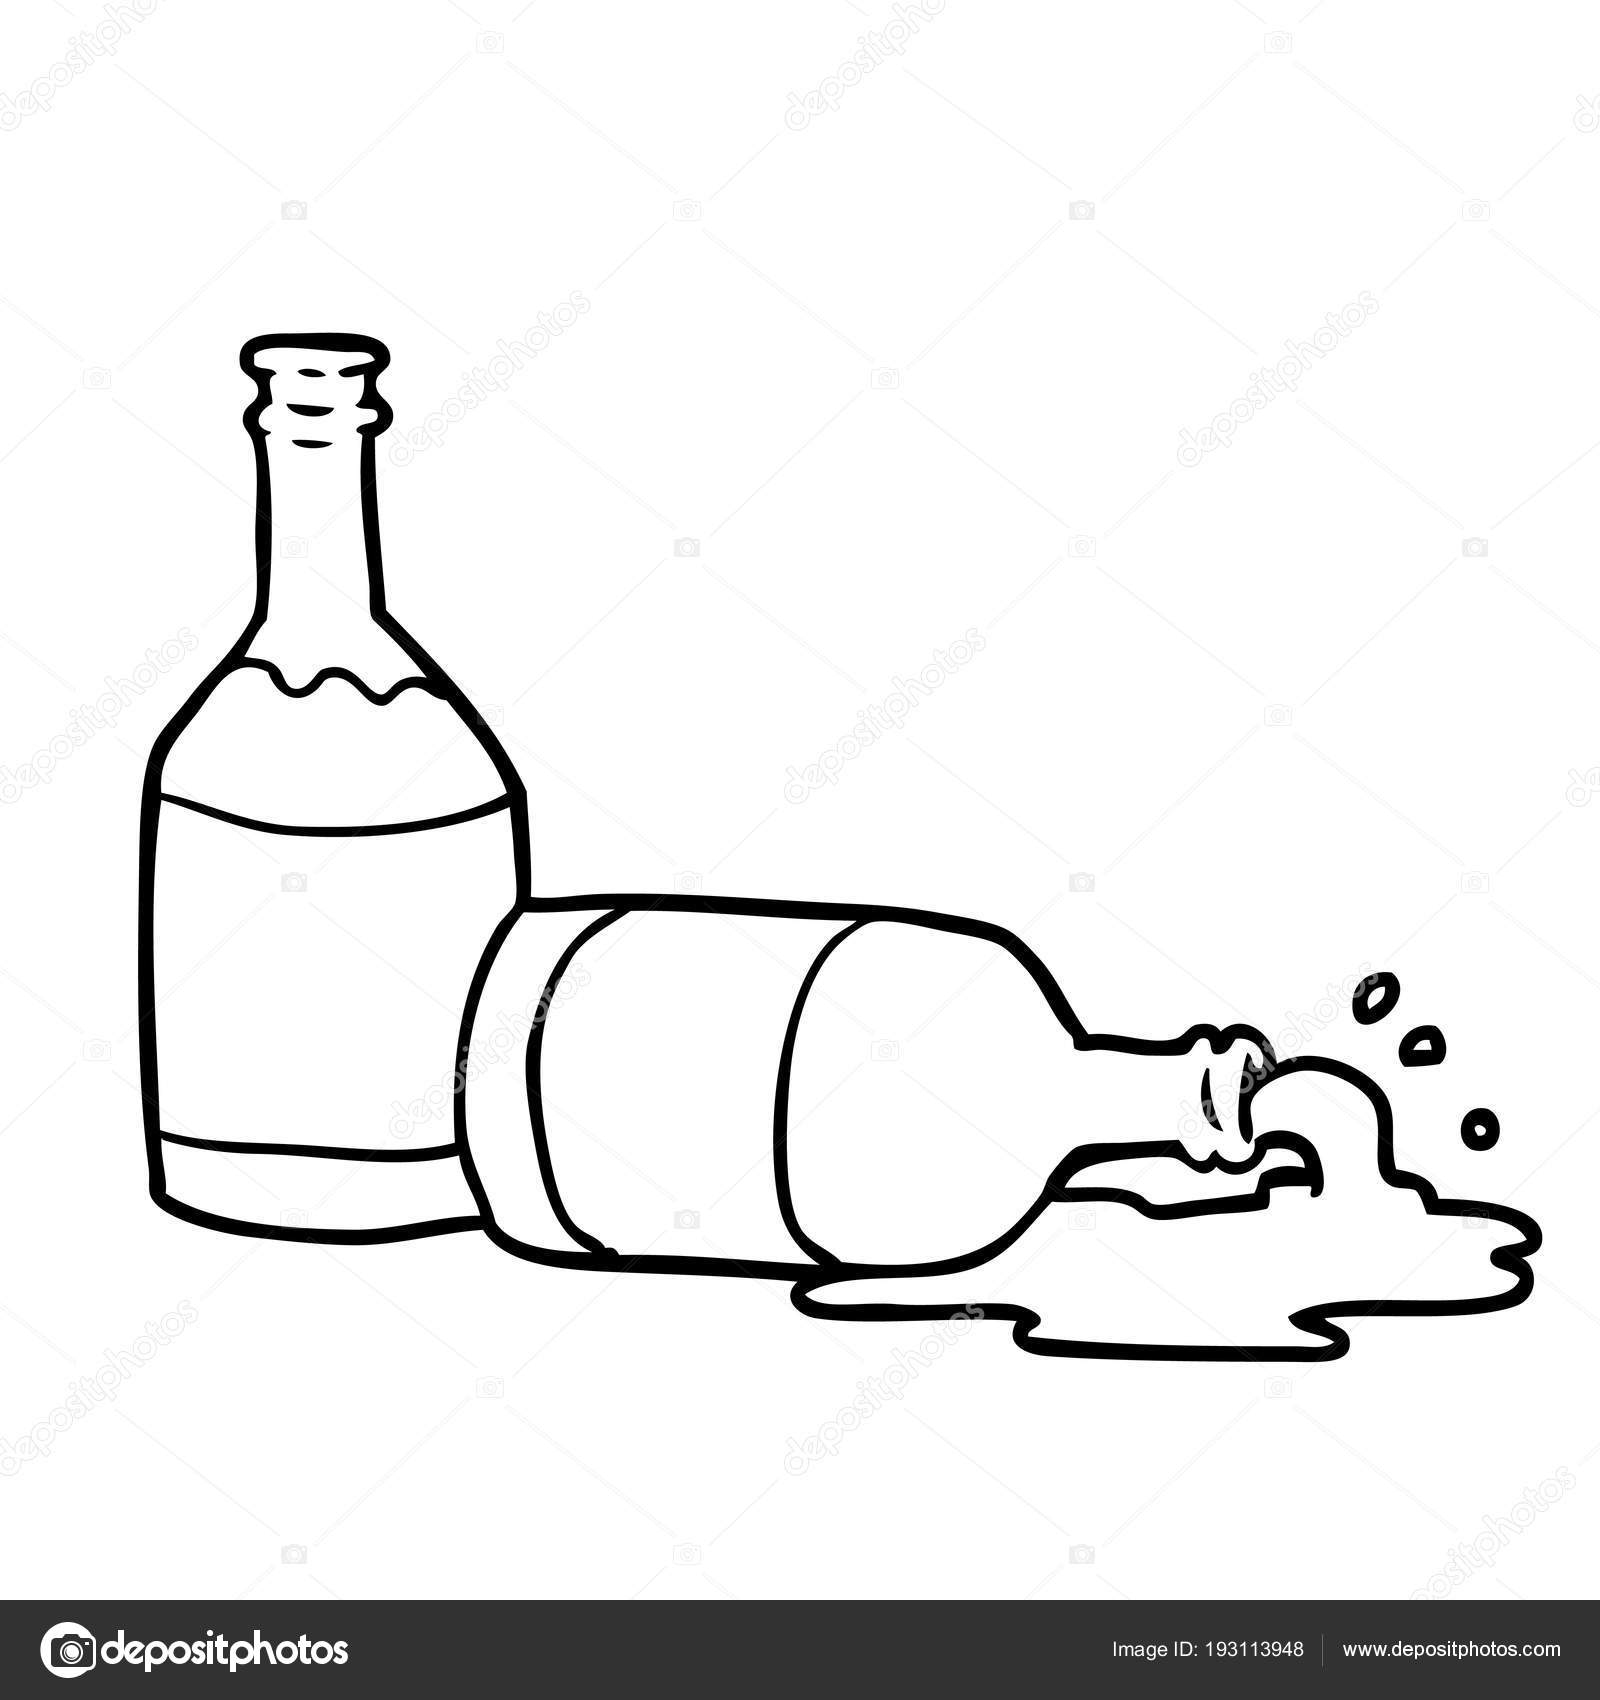 Illustration of hand holding a beer bottle | premium image by rawpixel.com  | Beer tattoos, Beer drawing, Beer illustration